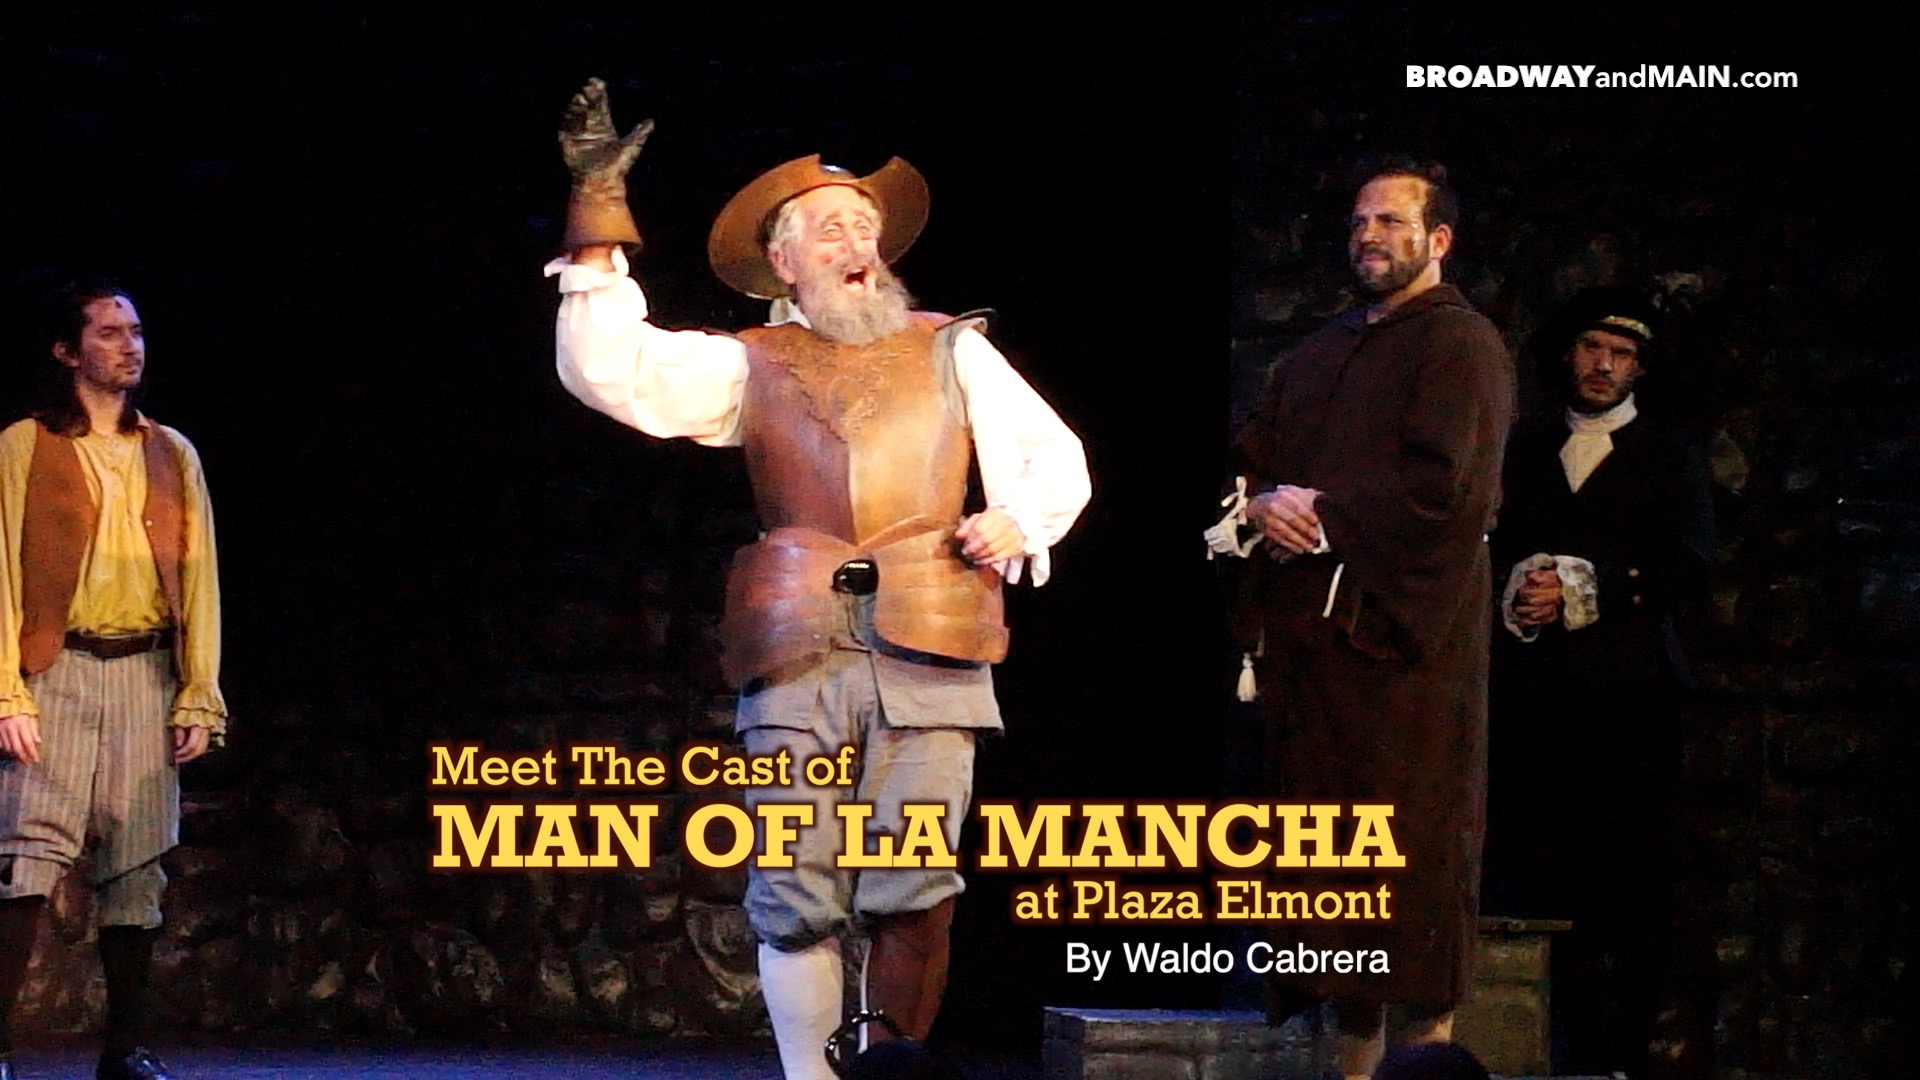 Meet The Cast of Man of La Mancha at Plaza Elmont